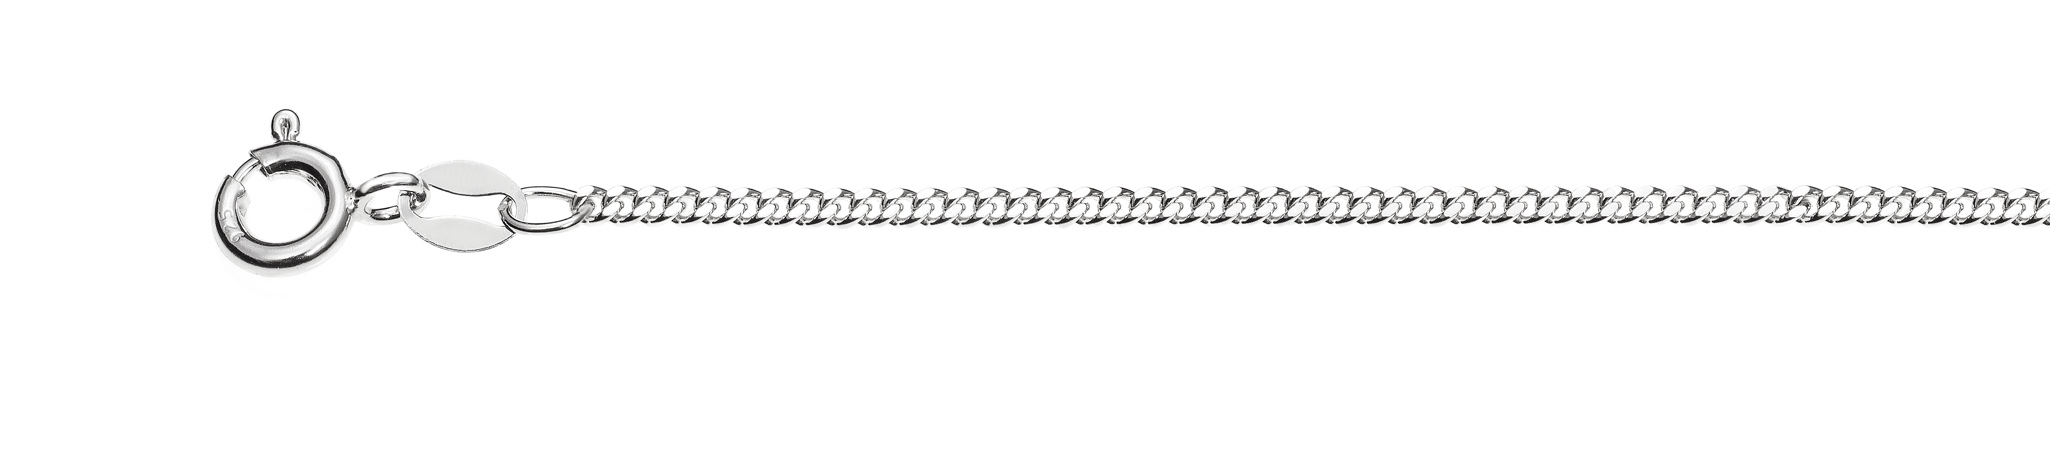 Ref.: 95550 - Diamond cut curb 0.50 - Wide 1.7